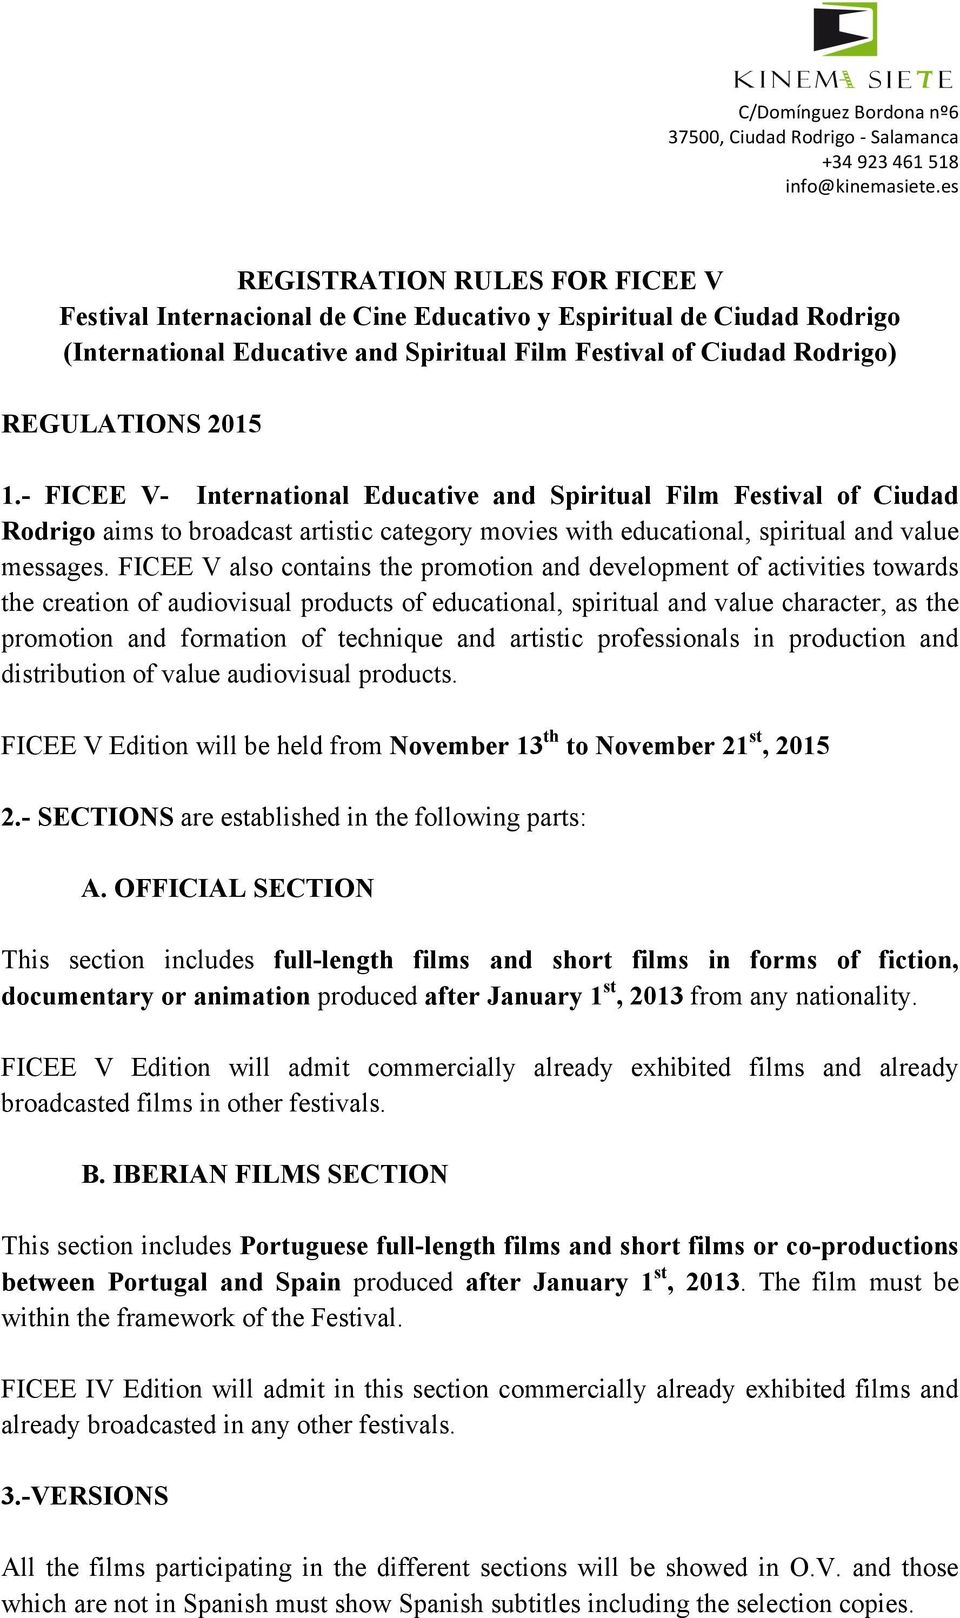 - FICEE V- International Educative and Spiritual Film Festival of Ciudad Rodrigo aims to broadcast artistic category movies with educational, spiritual and value messages.